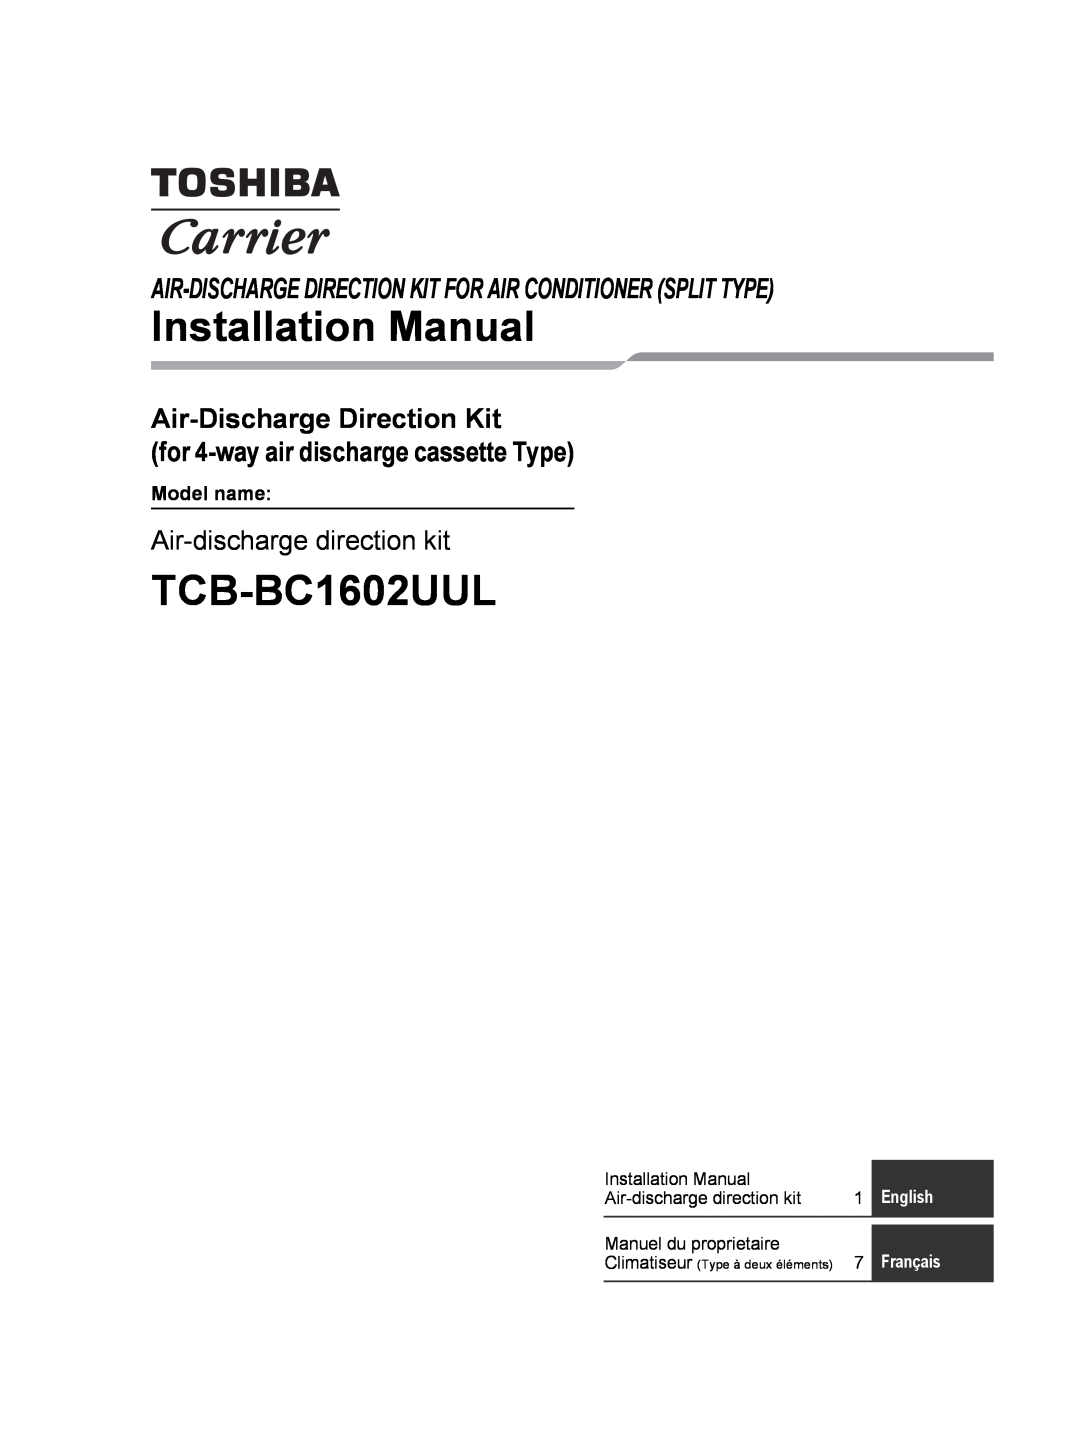 Toshiba TCB-BC1602UUL installation manual Installation Manual, Air-DischargeDirection Kit, Air-dischargedirection kit 